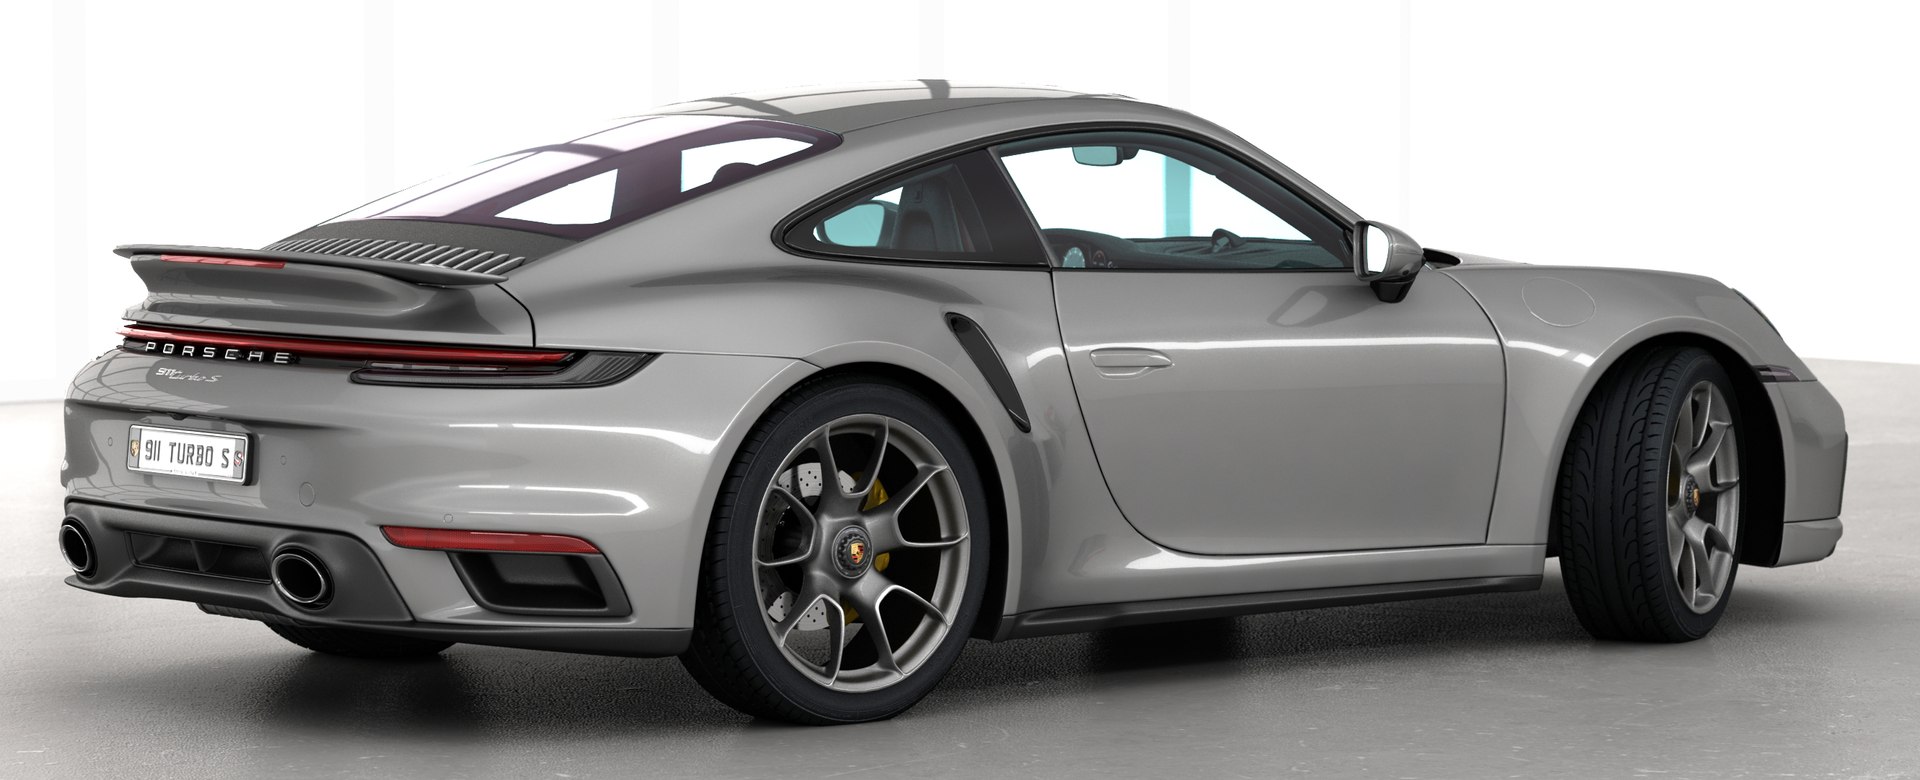 3D Model Realistic Porsche 911 Turbo - TurboSquid 1640942